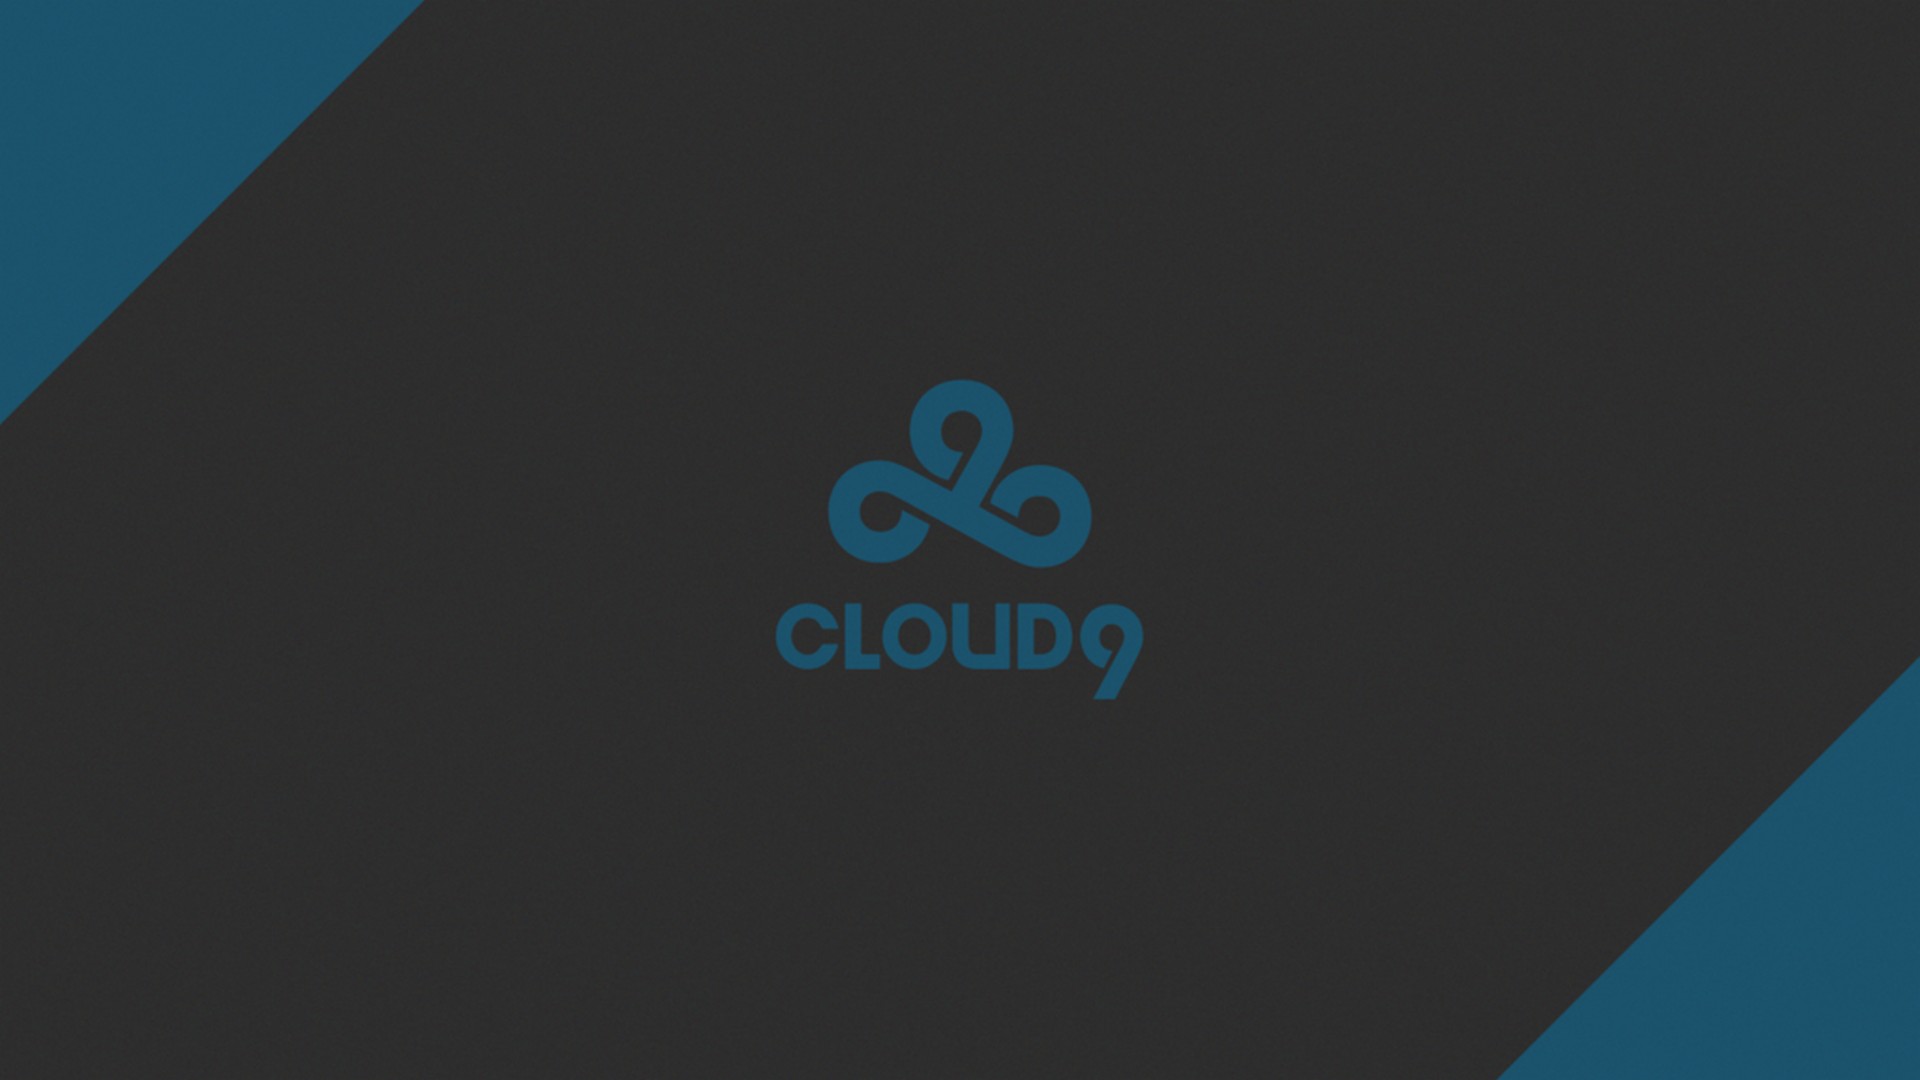 Cloud 9 Games Desktop Wallpaper